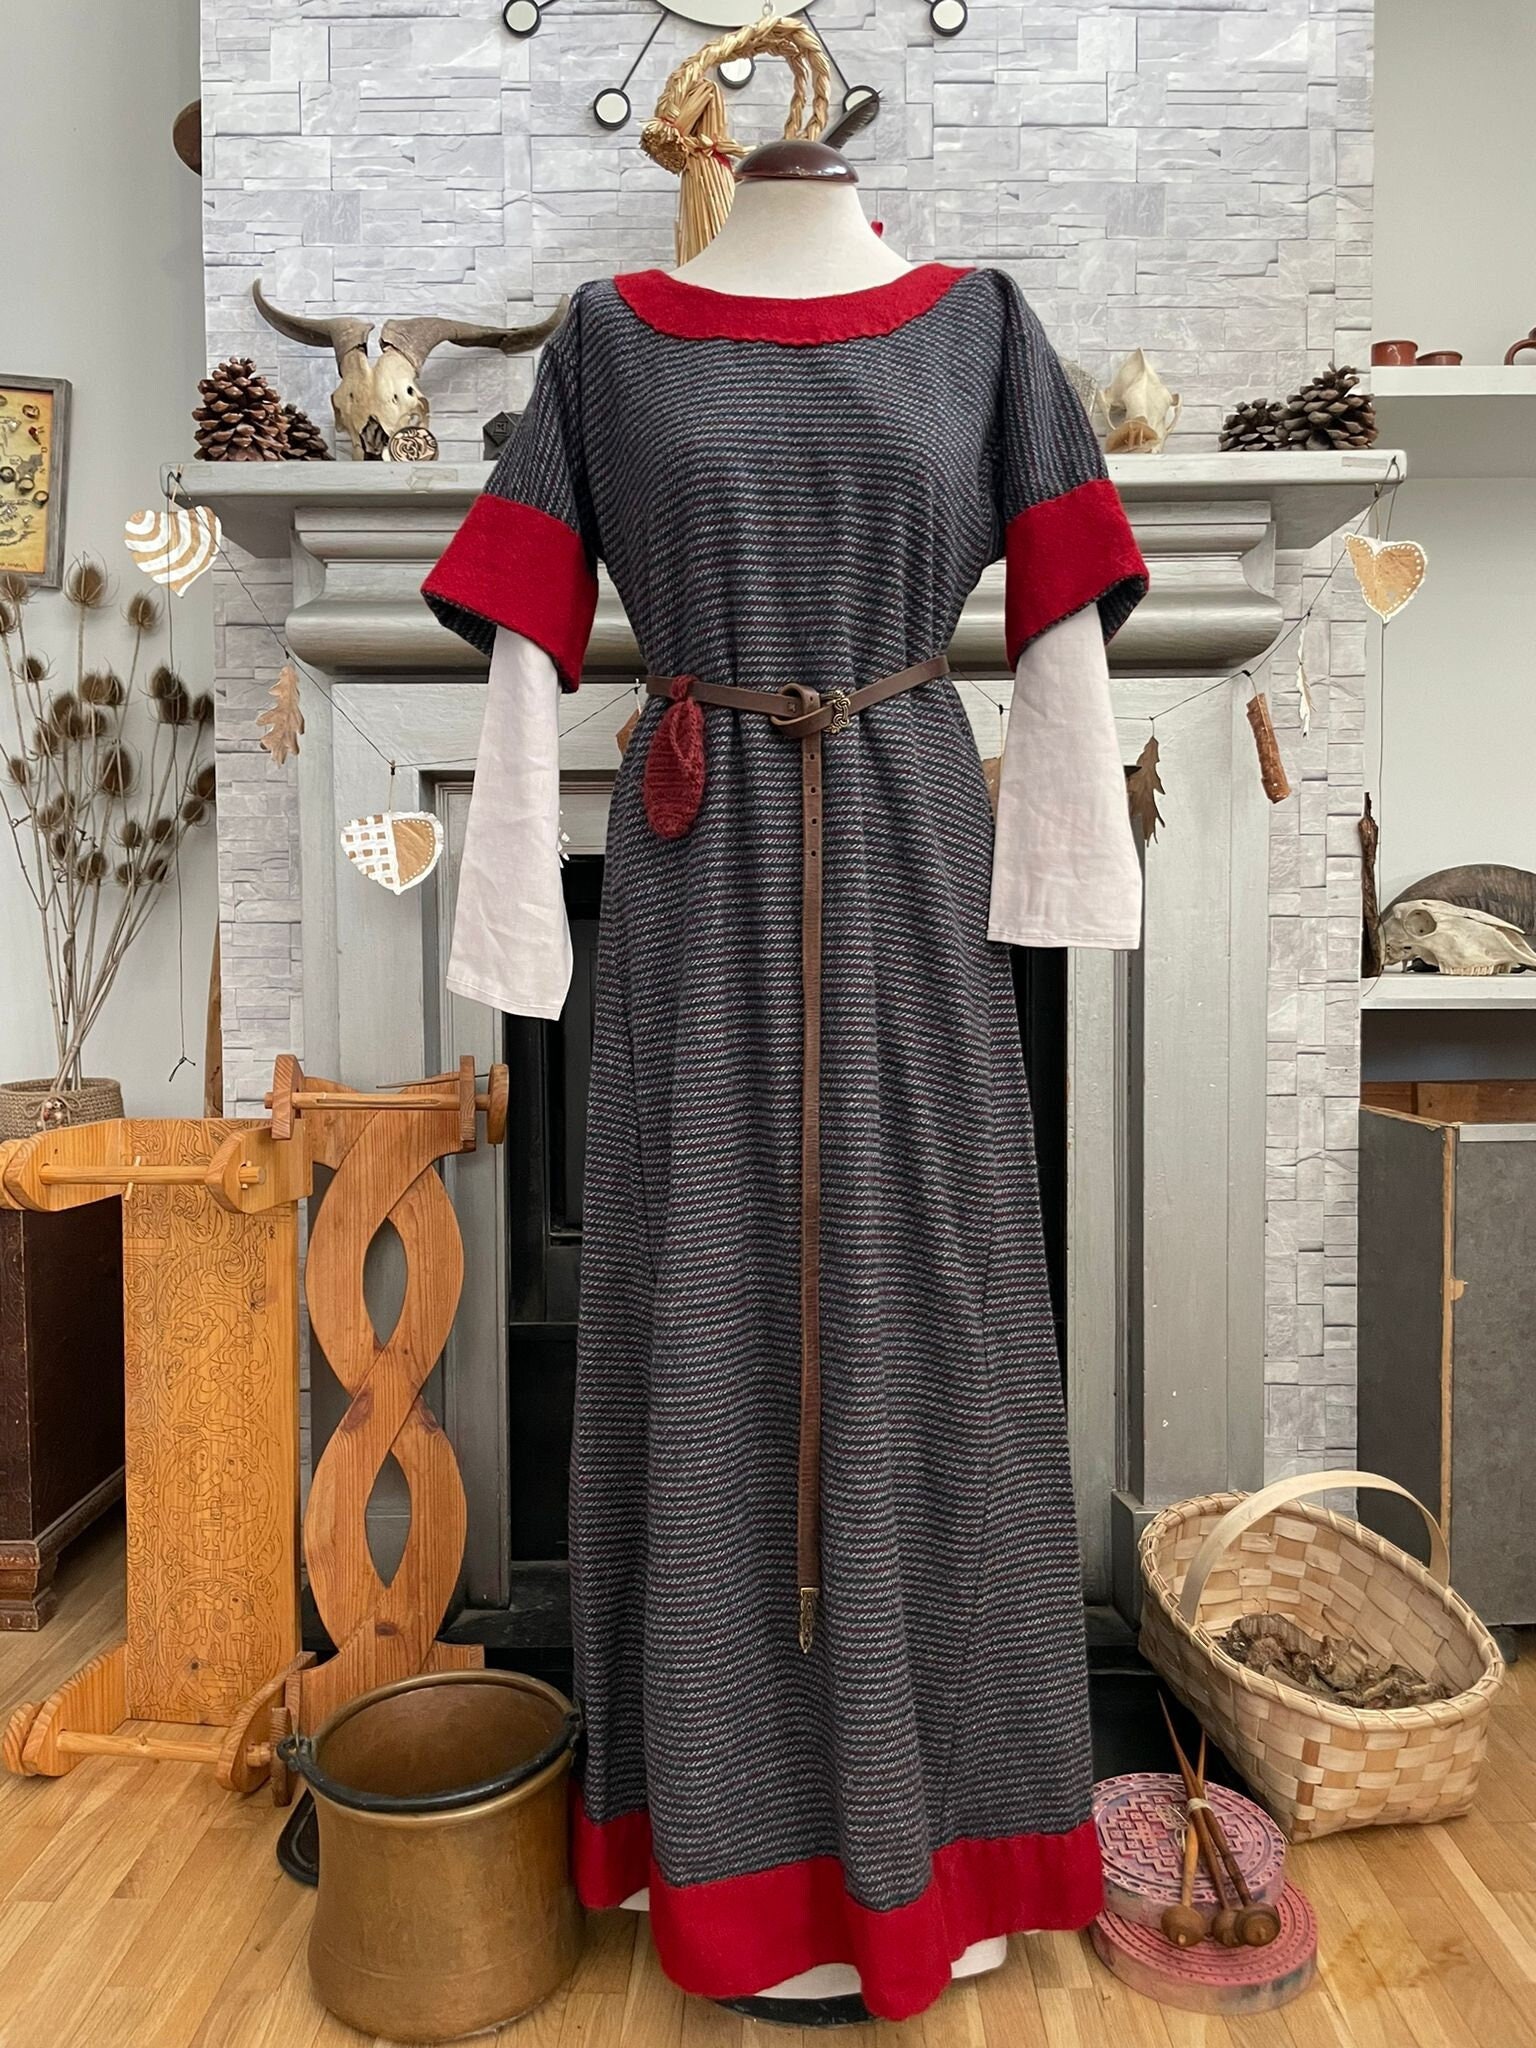 patron Vestido Medieval Mujer - Abelis fashion